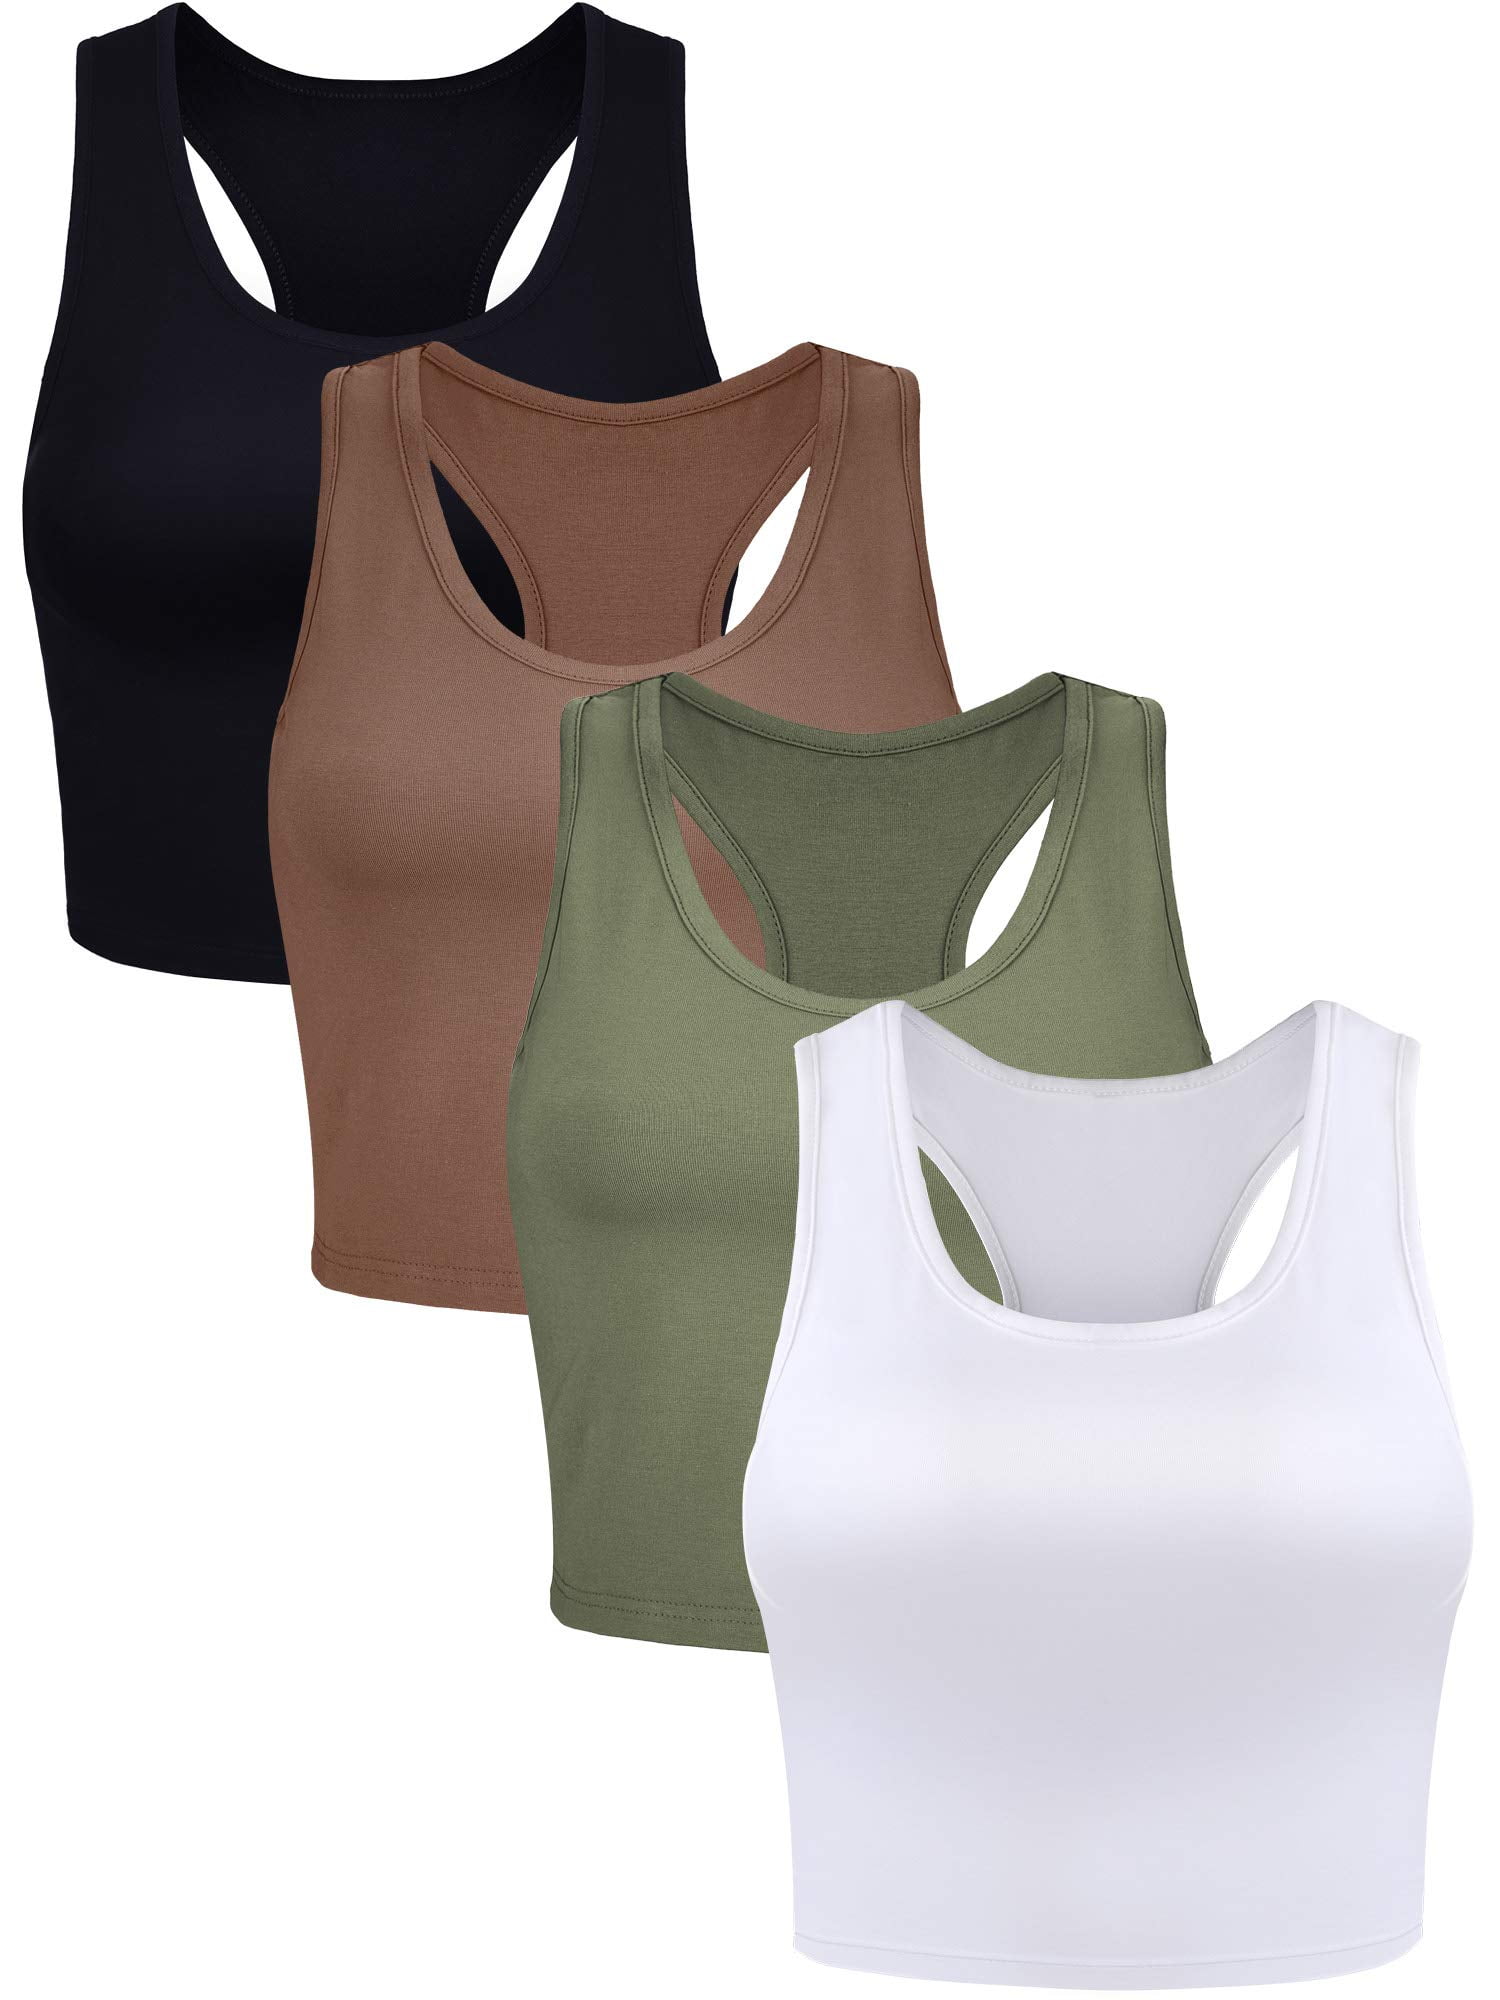 6 Pieces Basic Crop Tank Tops Sleeveless Racerback Crop Sport Cotton Top for Women 